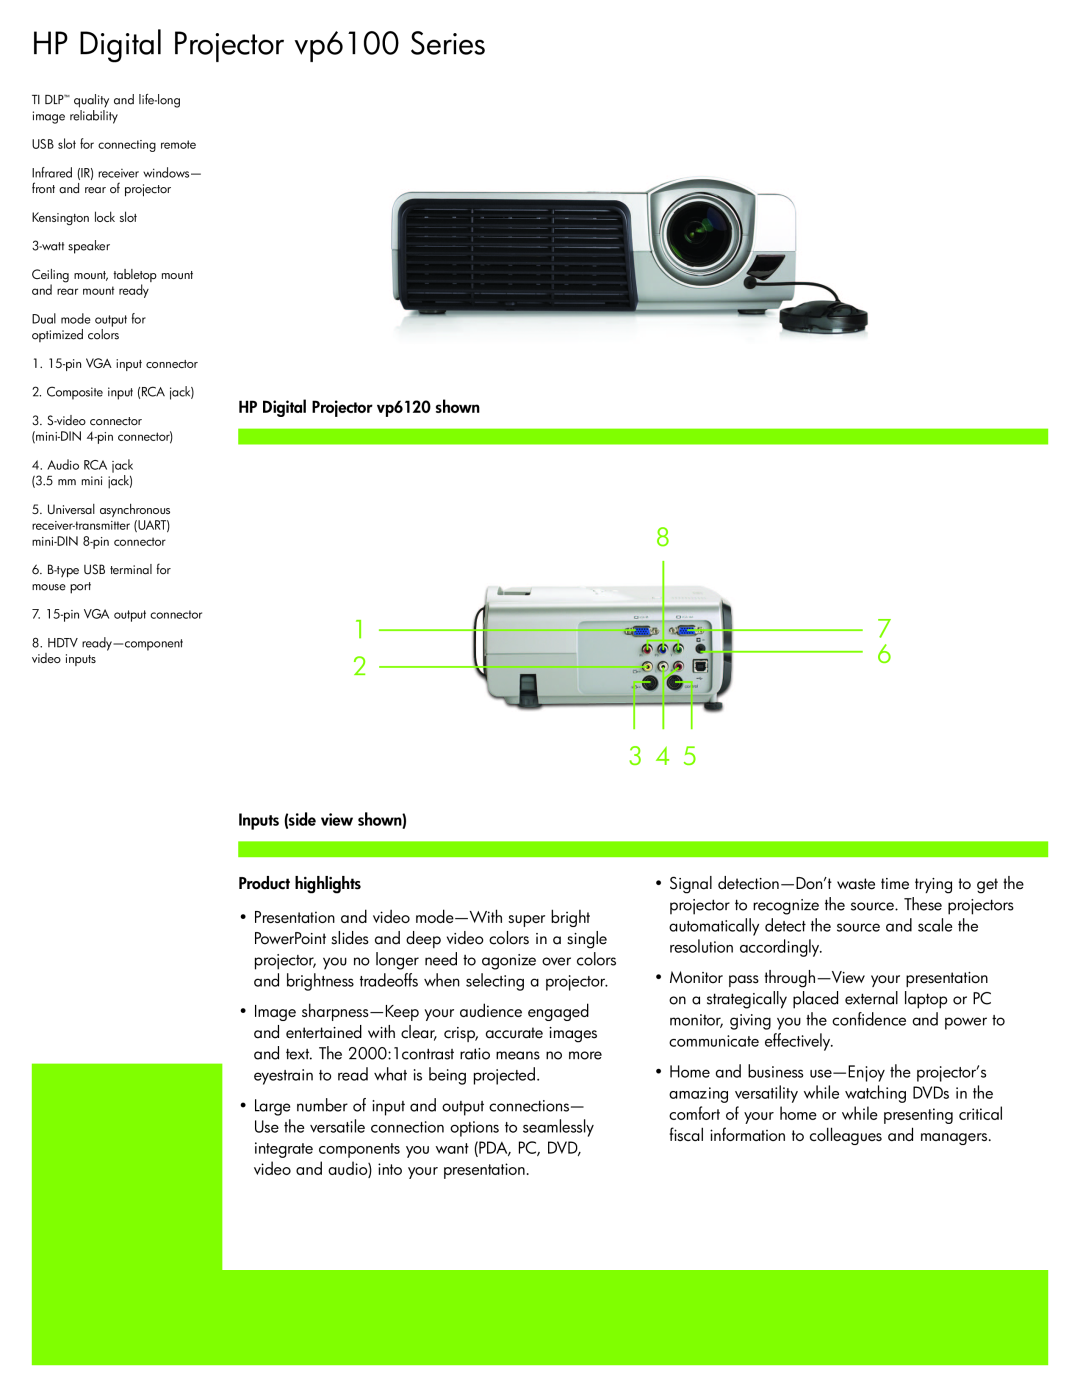 Sharp vp6110 warranty HP Digital Projector vp6100 Series, HP Digital Projector vp6120 shown, Inputs side view shown 